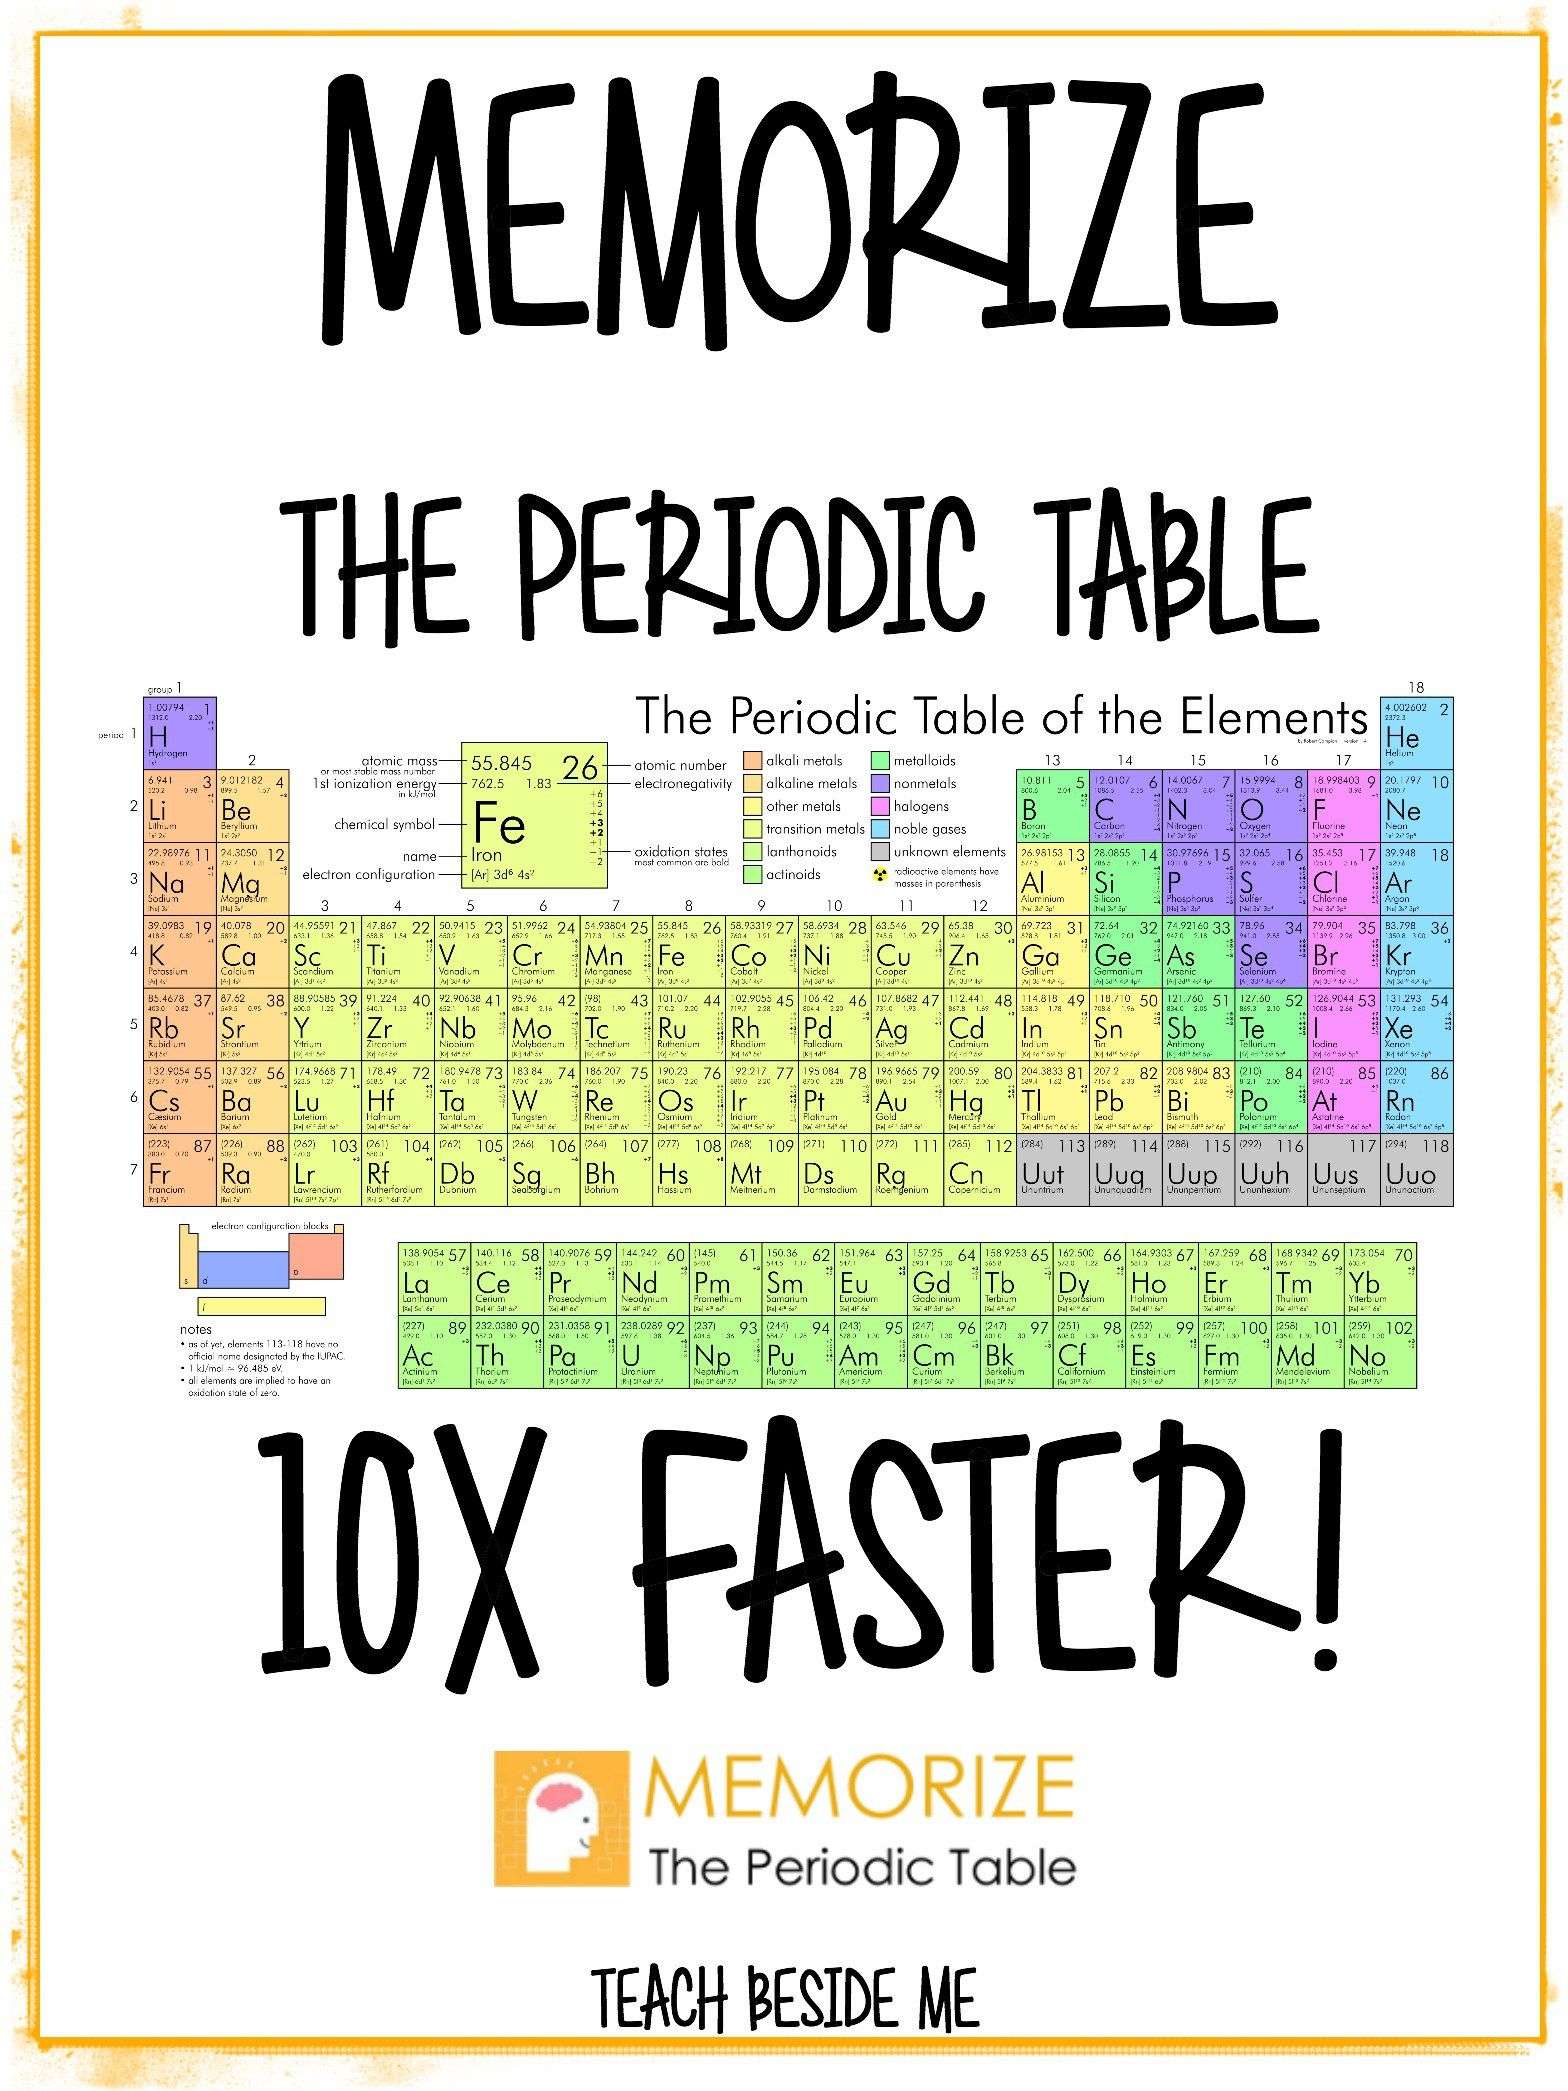 Memorize the Periodic Table